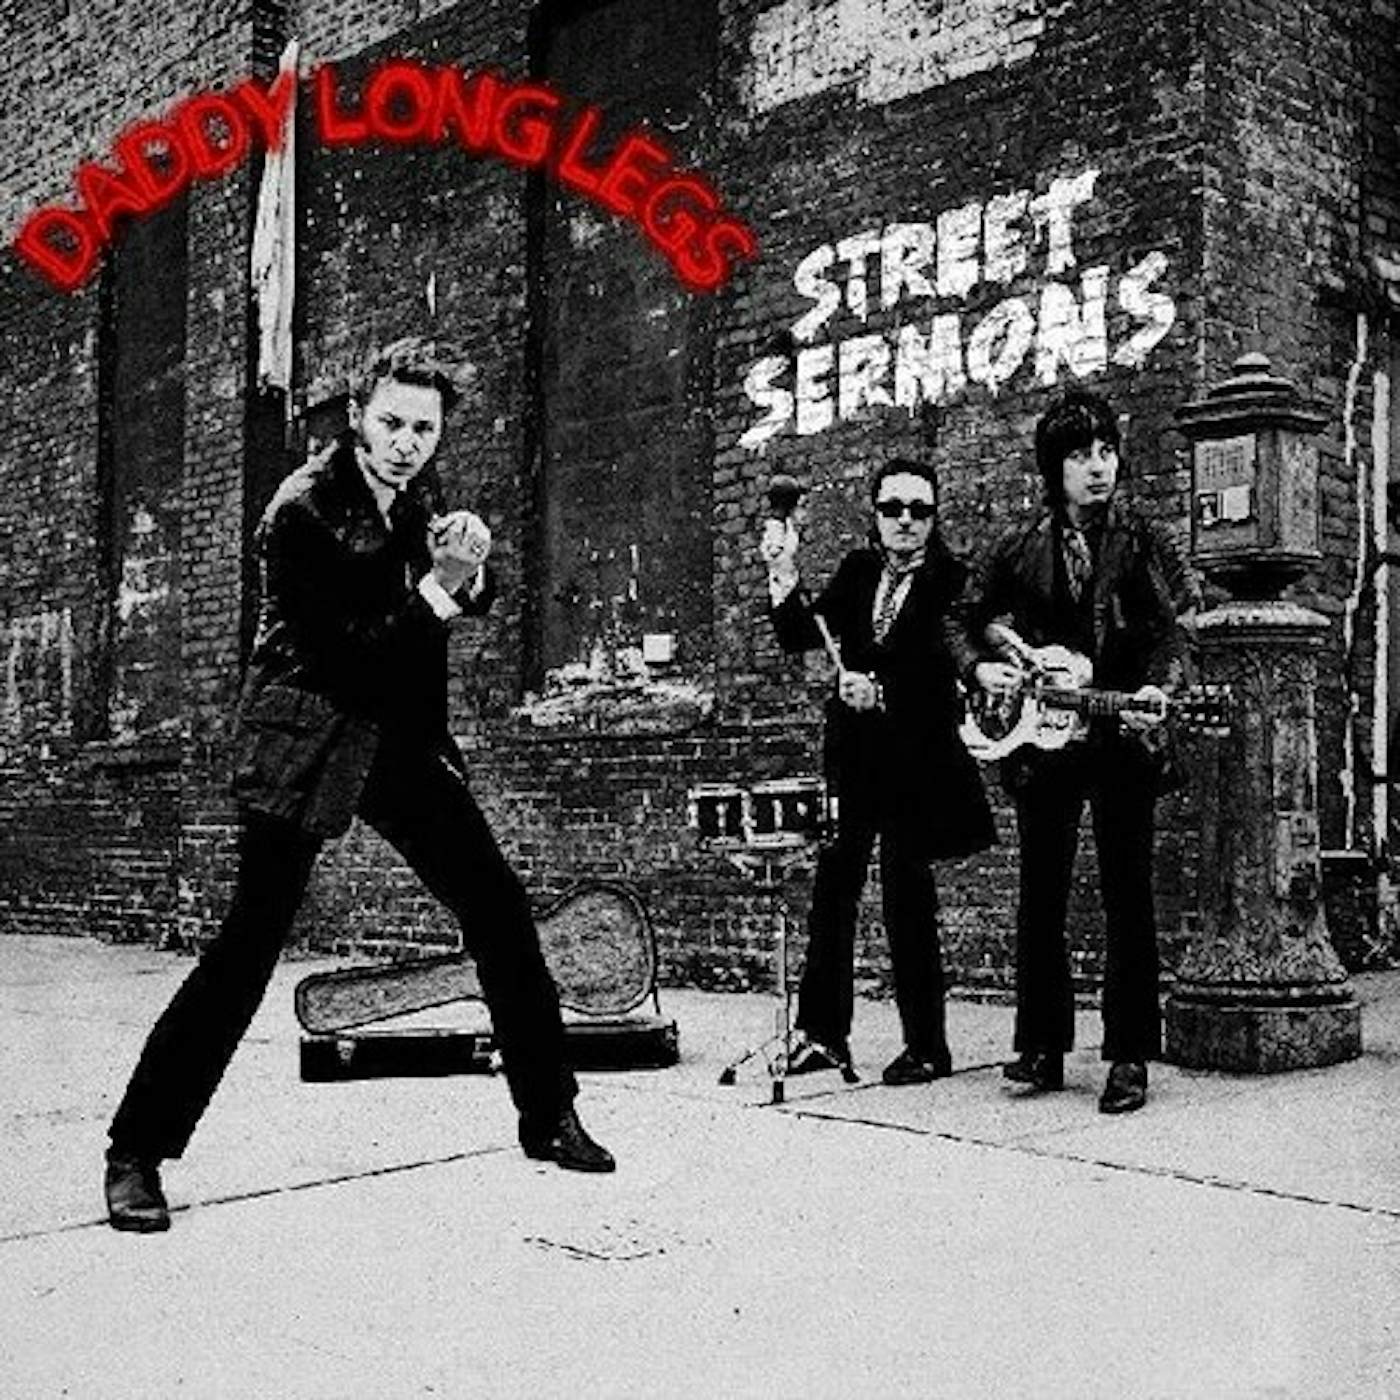 DADDY LONG LEGS STREET SERMONS Vinyl Record